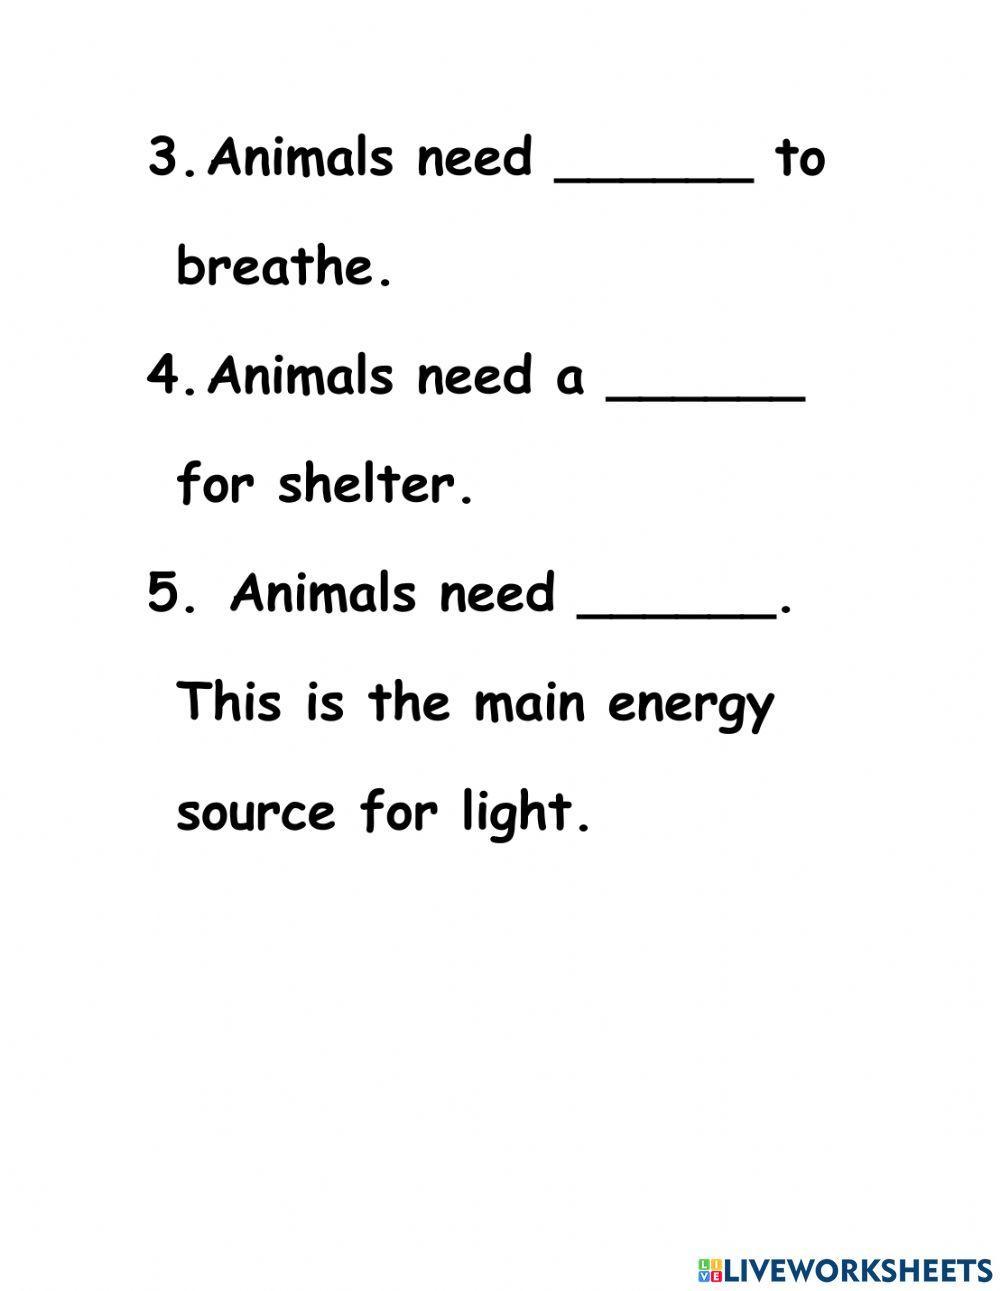 Basic Needs of Animals